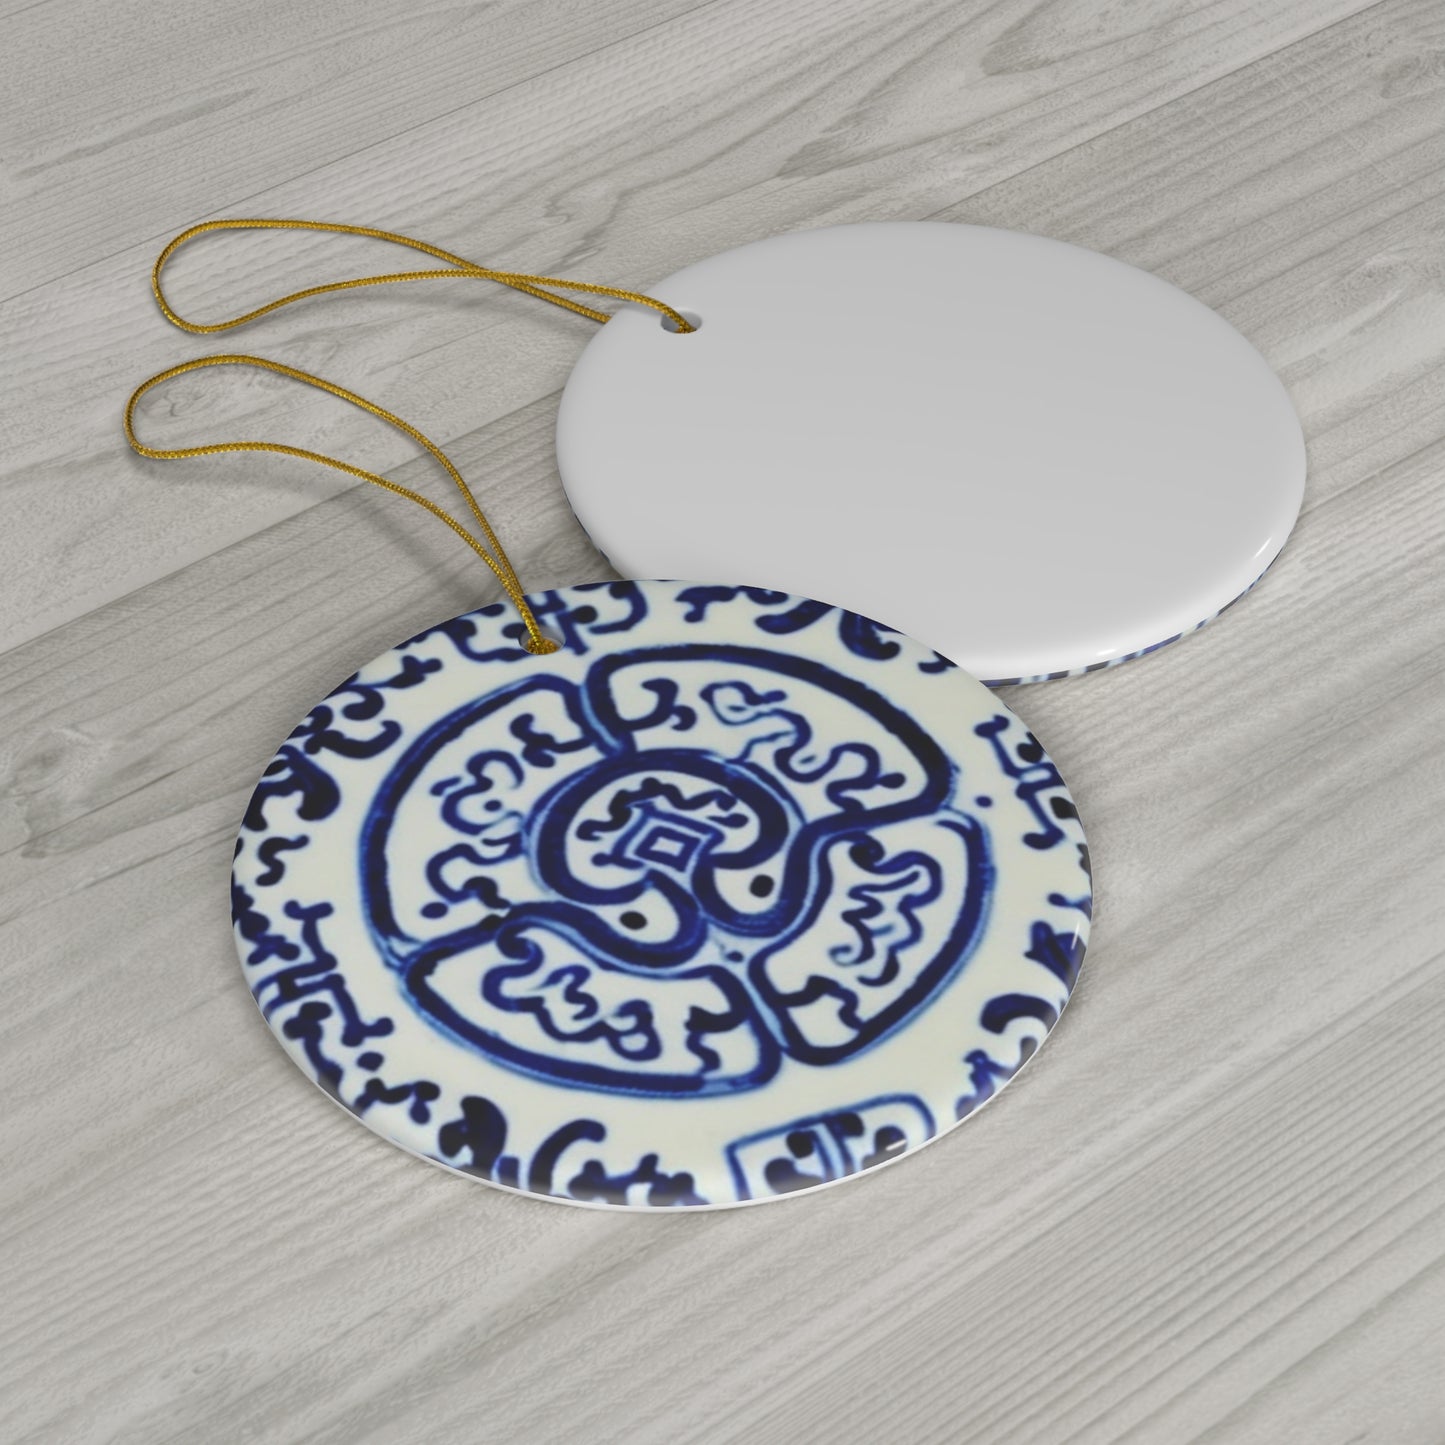 Chinese Symbol Decorative Pattern Ming Dynasty Ceramic Ornament